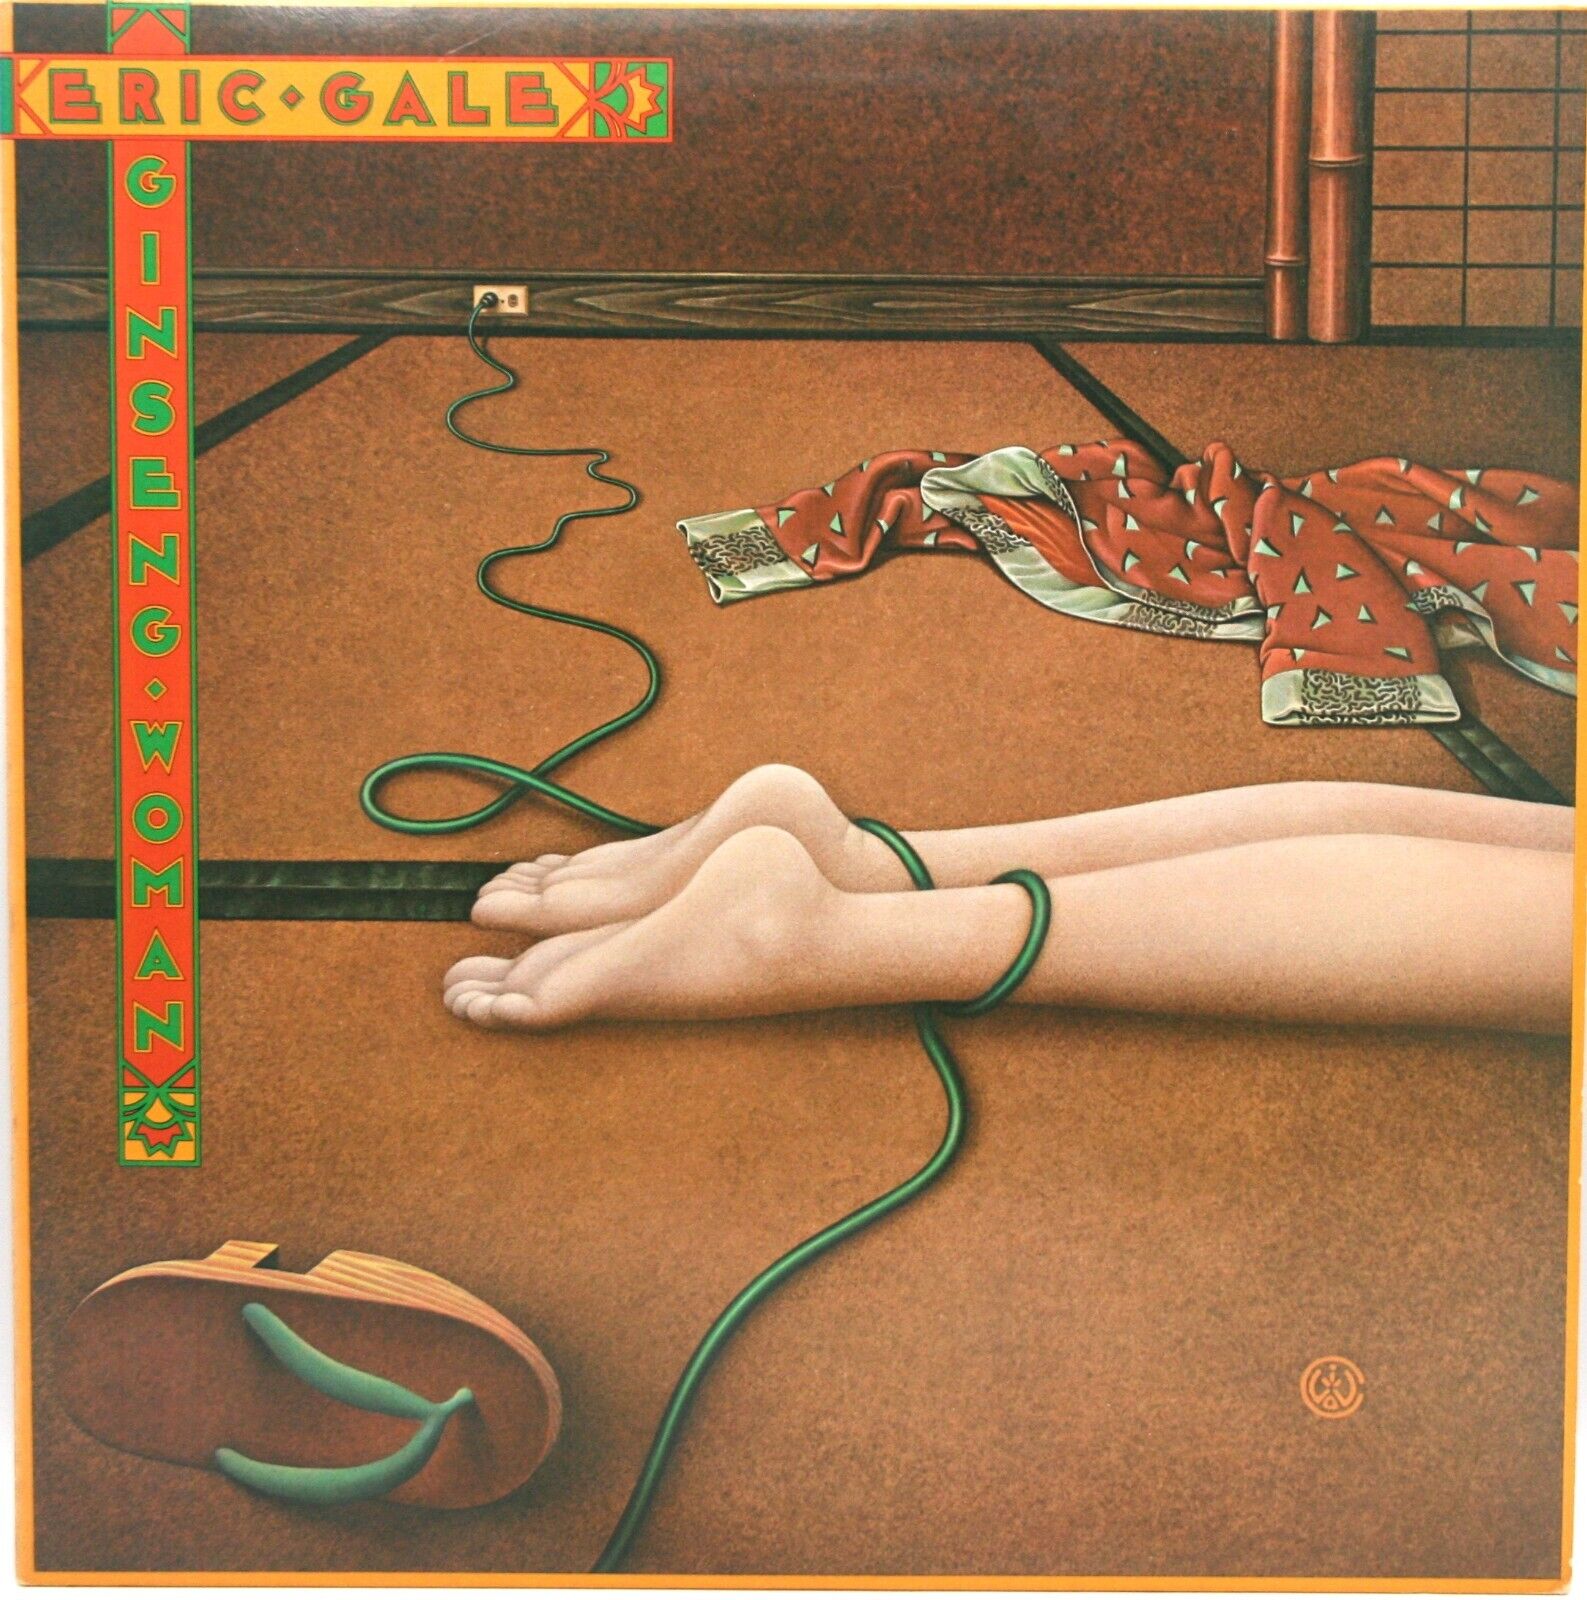 Eric Gale - Ginseng Woman; Vinyl LP (1977) Columbia PC-34421; VG+